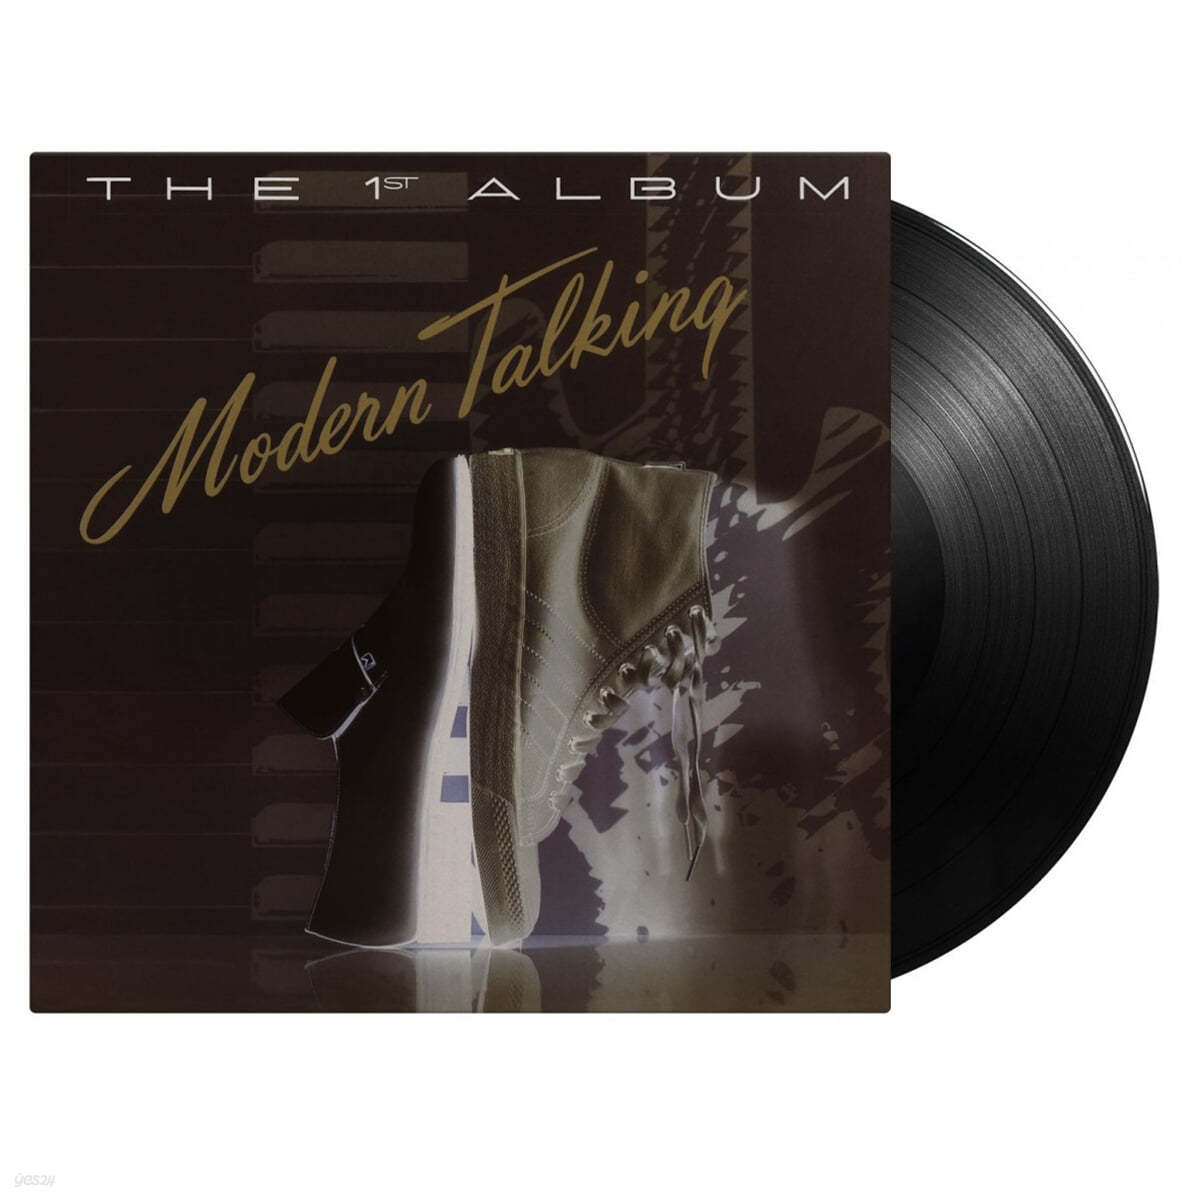 Modern Talking (모던 토킹) - 1집 The First Album [LP] 